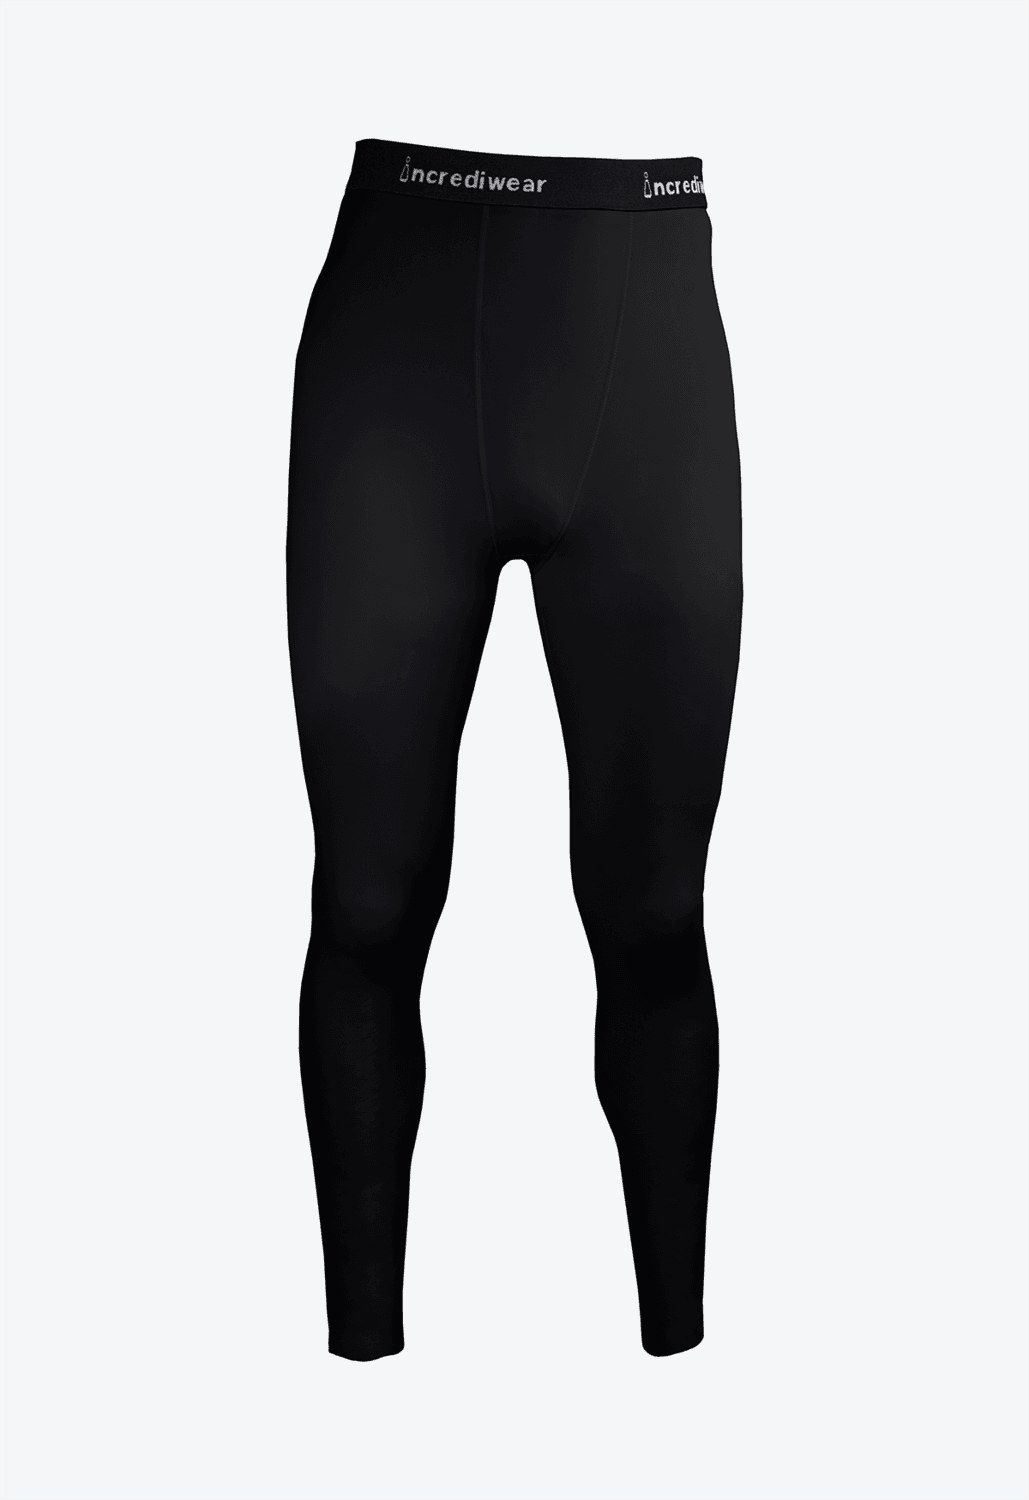 Incrediwear Men's Performance Pants Barva: černá, Velikost: M